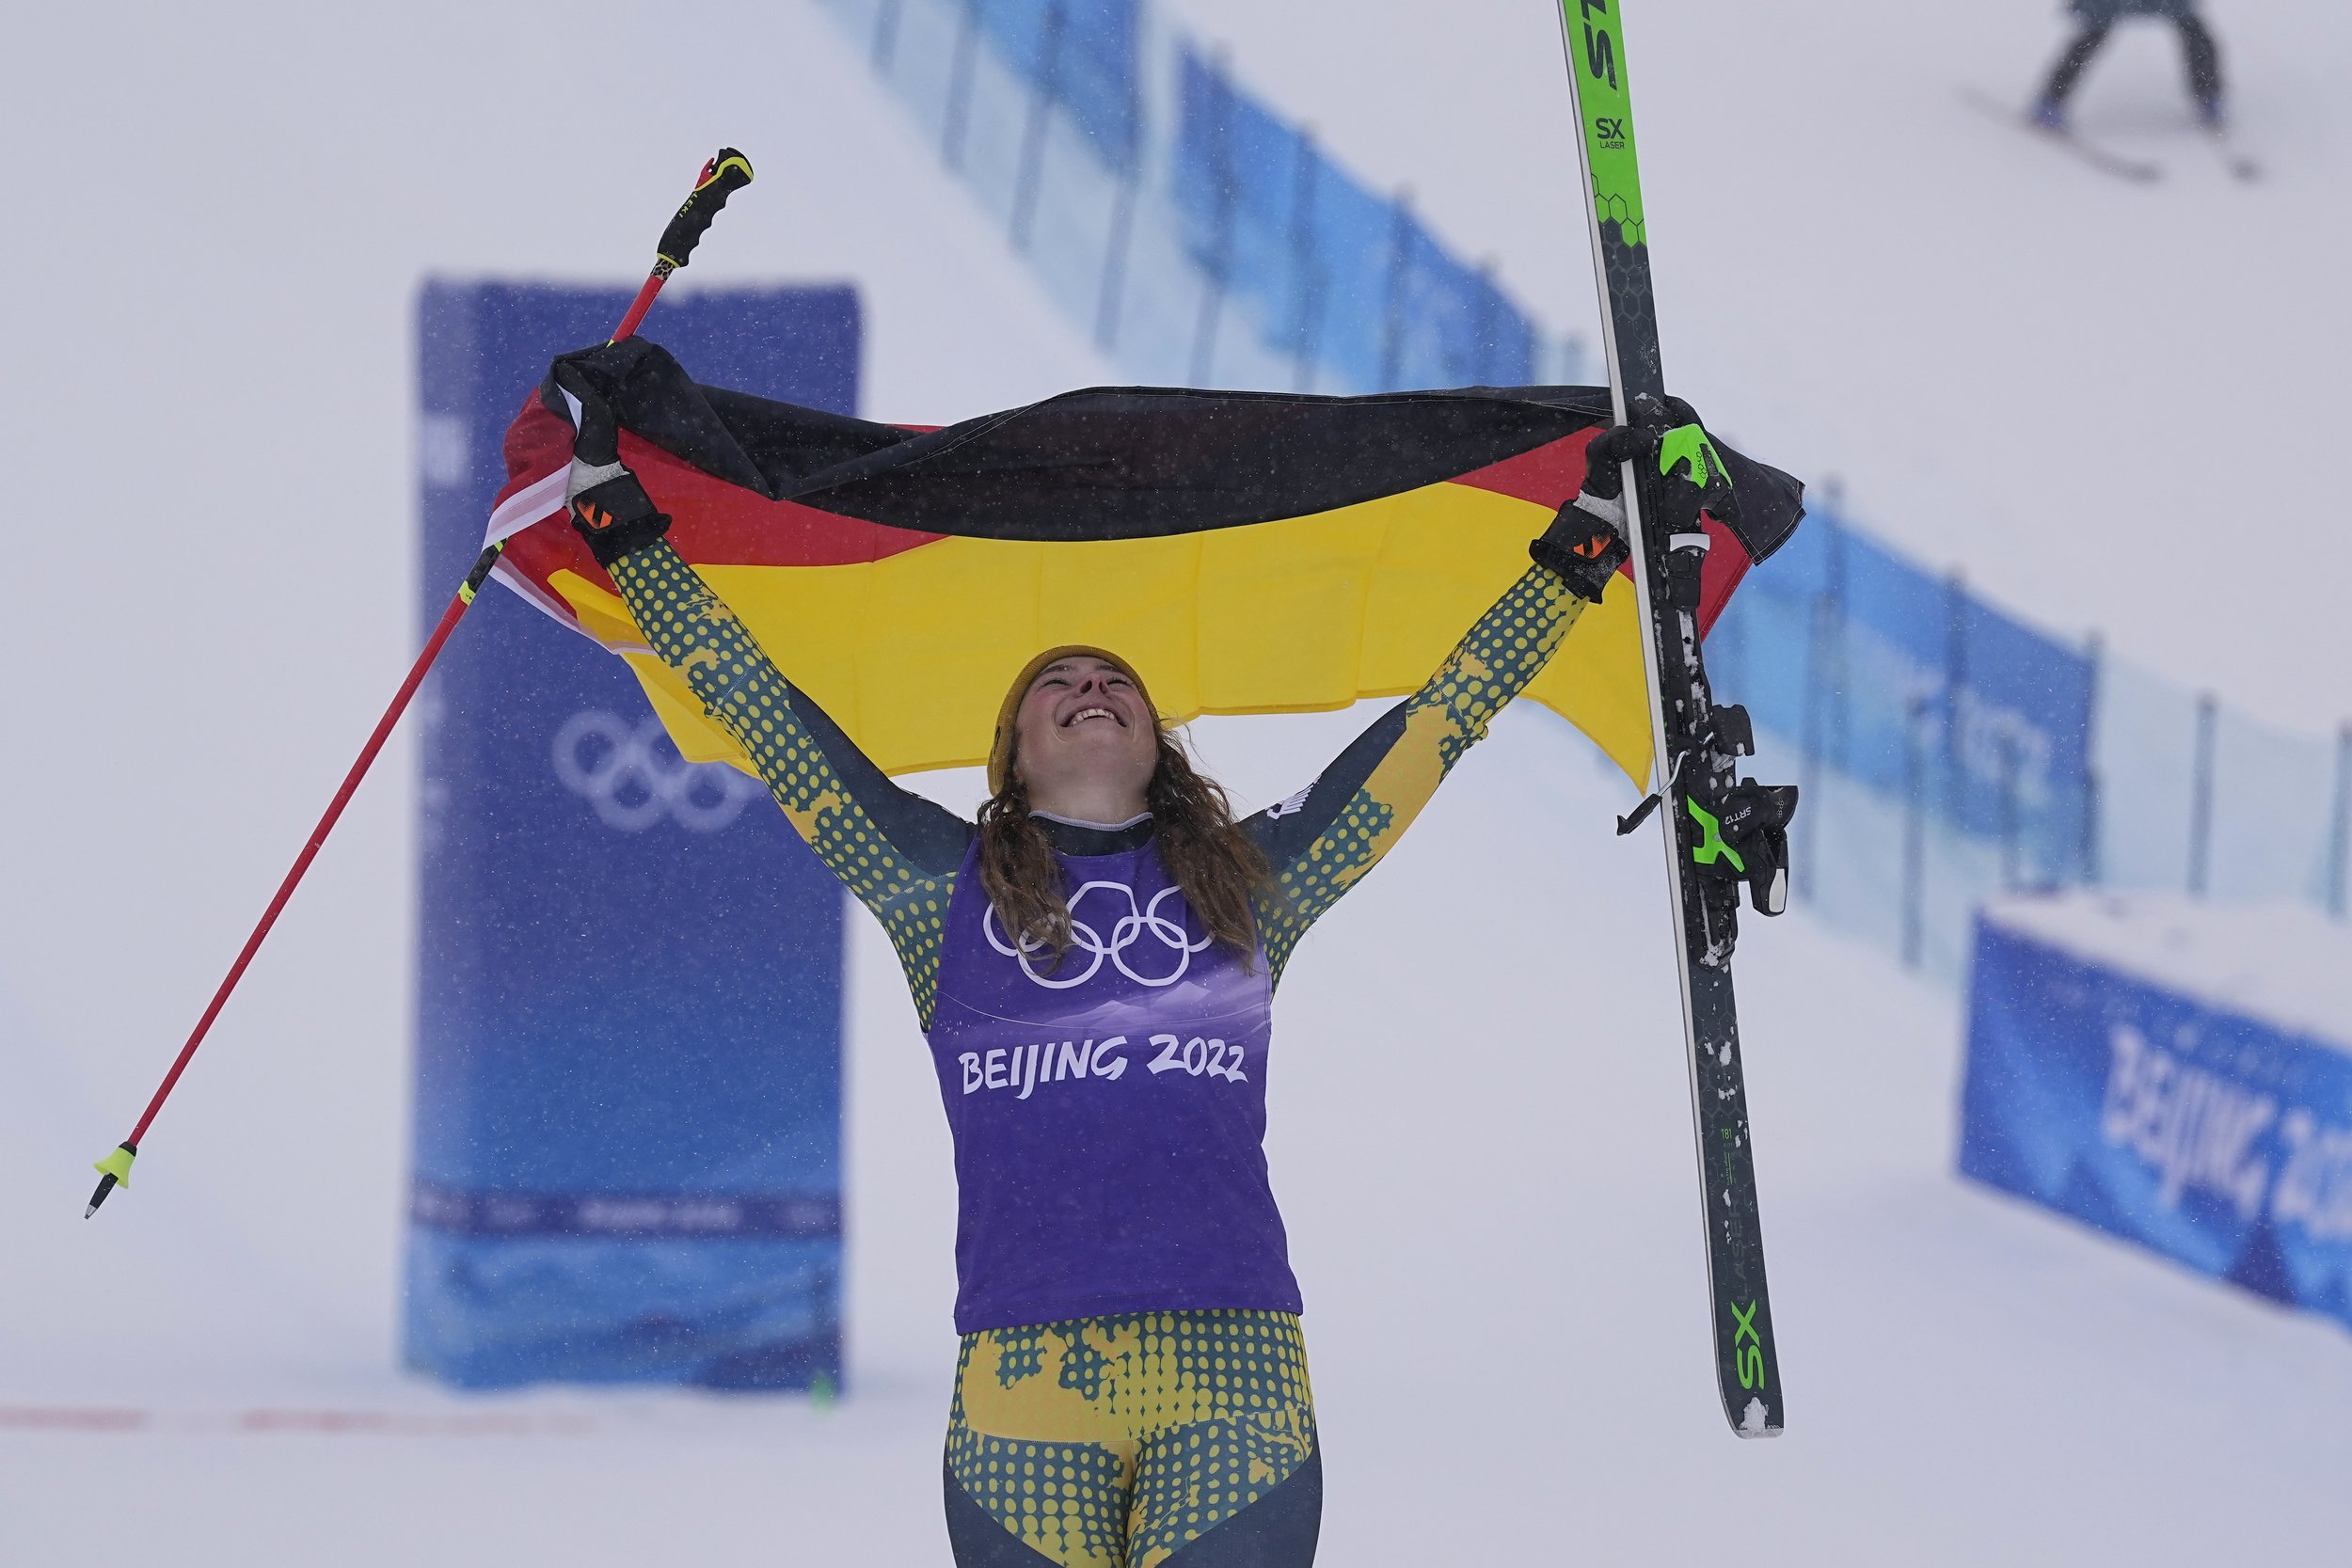  Bronze medal winner Germany's Daniela Maier celebrates during the venue award ceremony for the women's cross at the 2022 Winter Olympics, Thursday, Feb. 17, 2022, in Zhangjiakou, China. (AP Photo/Gregory Bull) 